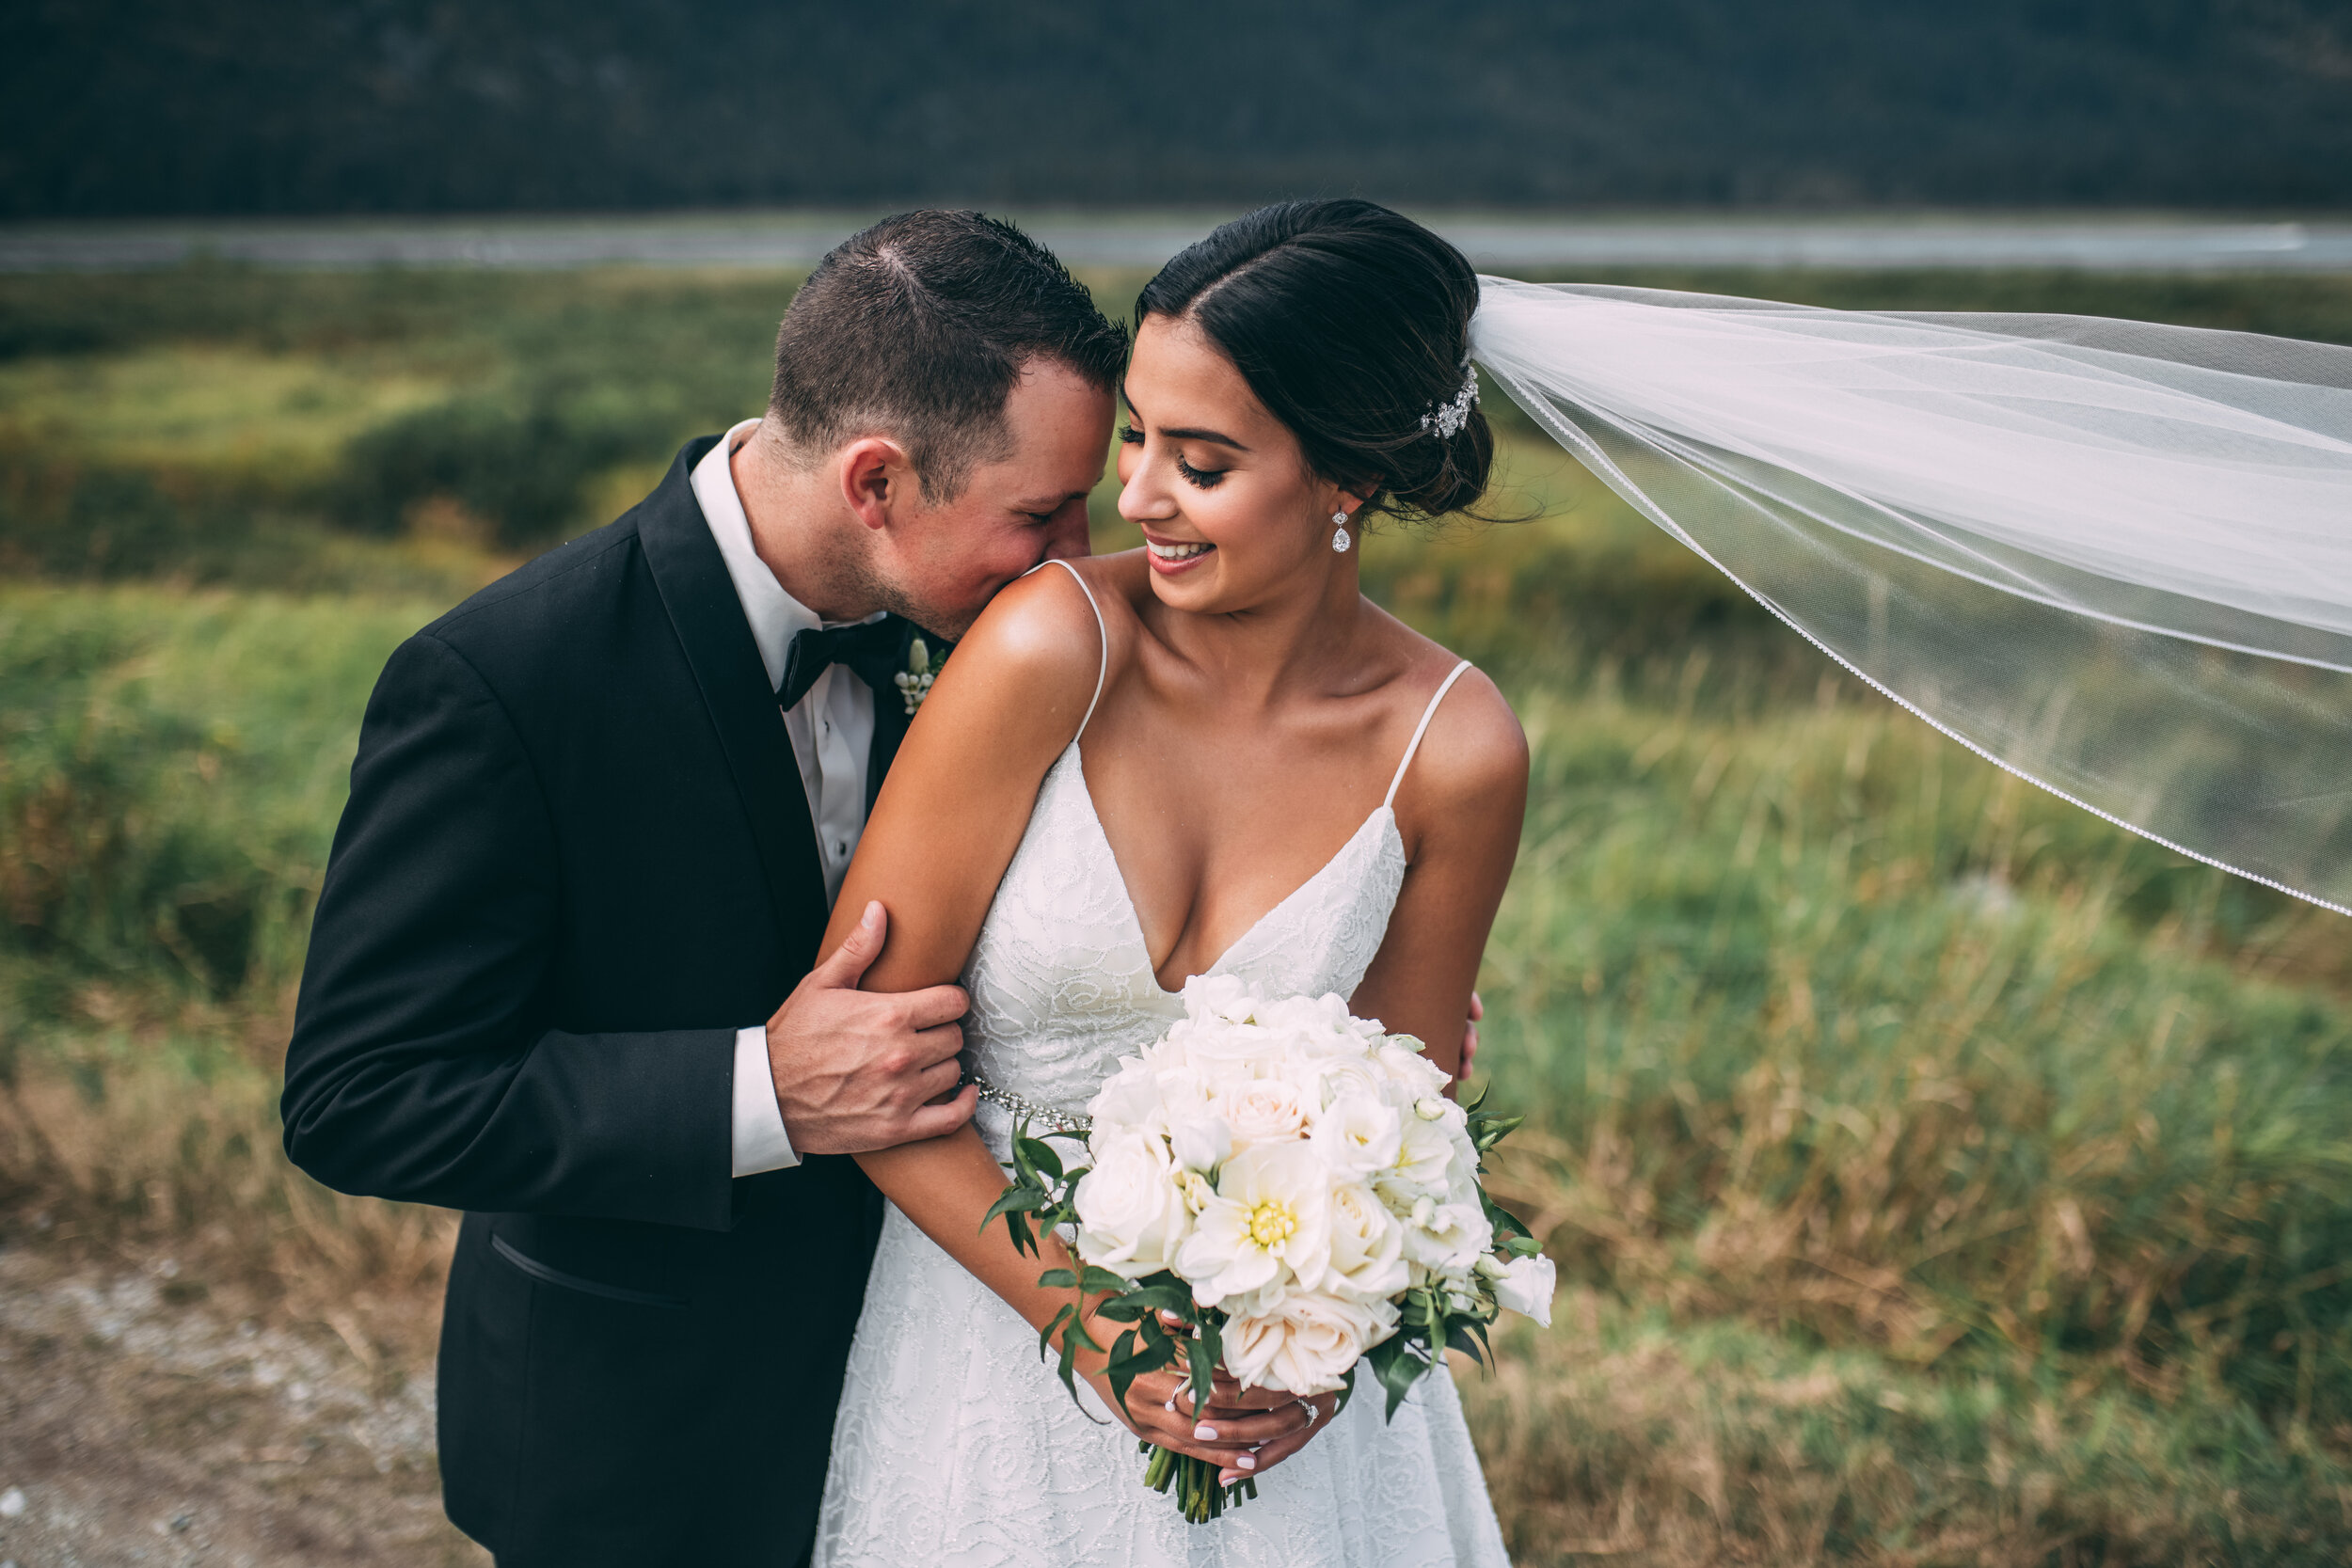 Natasha & Lee Sneak Peeks - August 31, 2019 Swaneset Wedding-1296.jpg